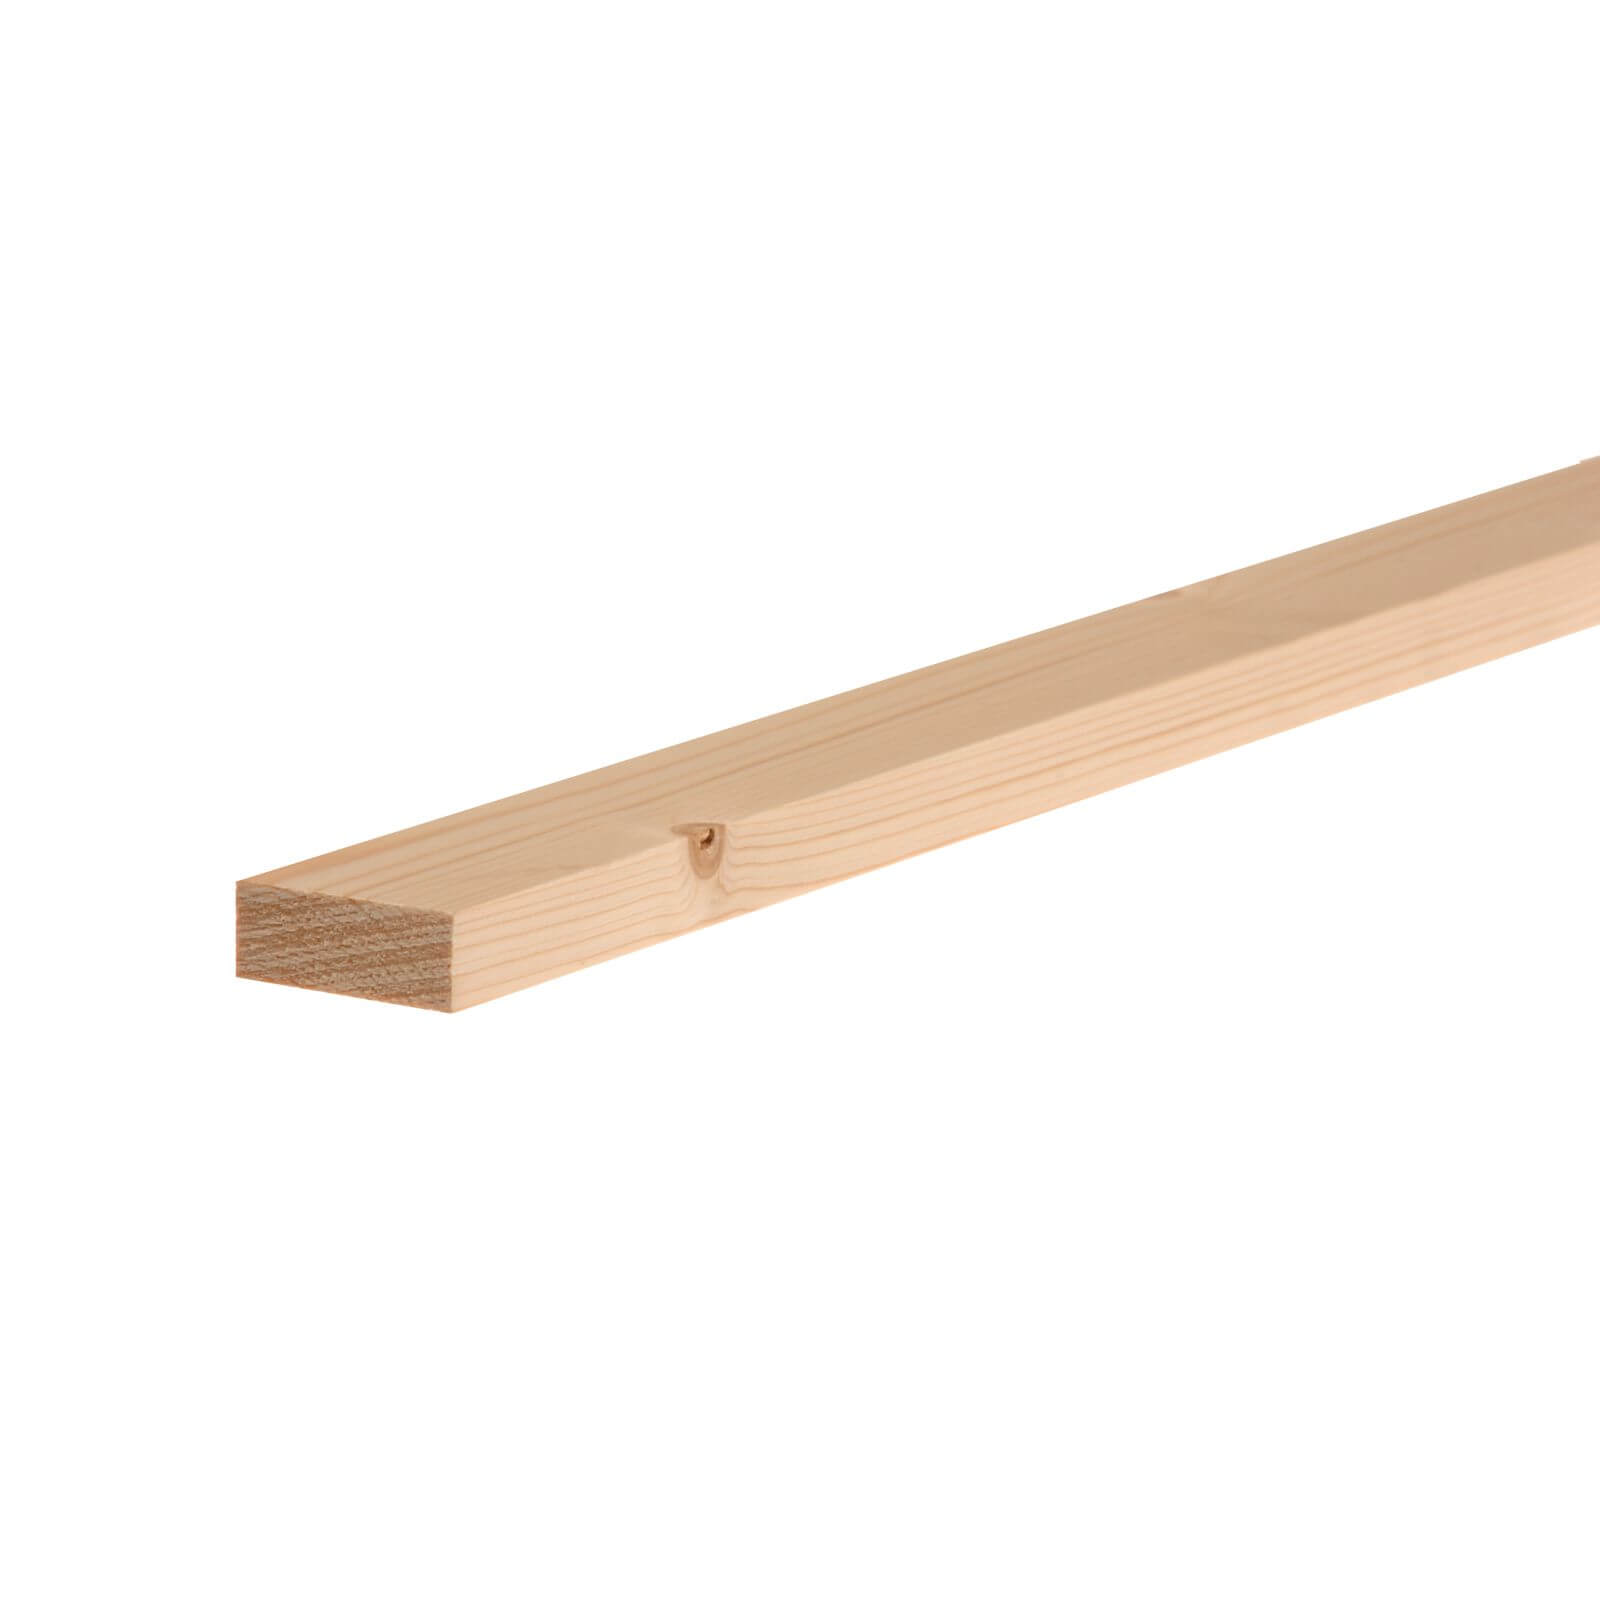 Metsa Planed Square Edge Stick Softwood Timber 2.4m (18 x 44 x 2400mm)